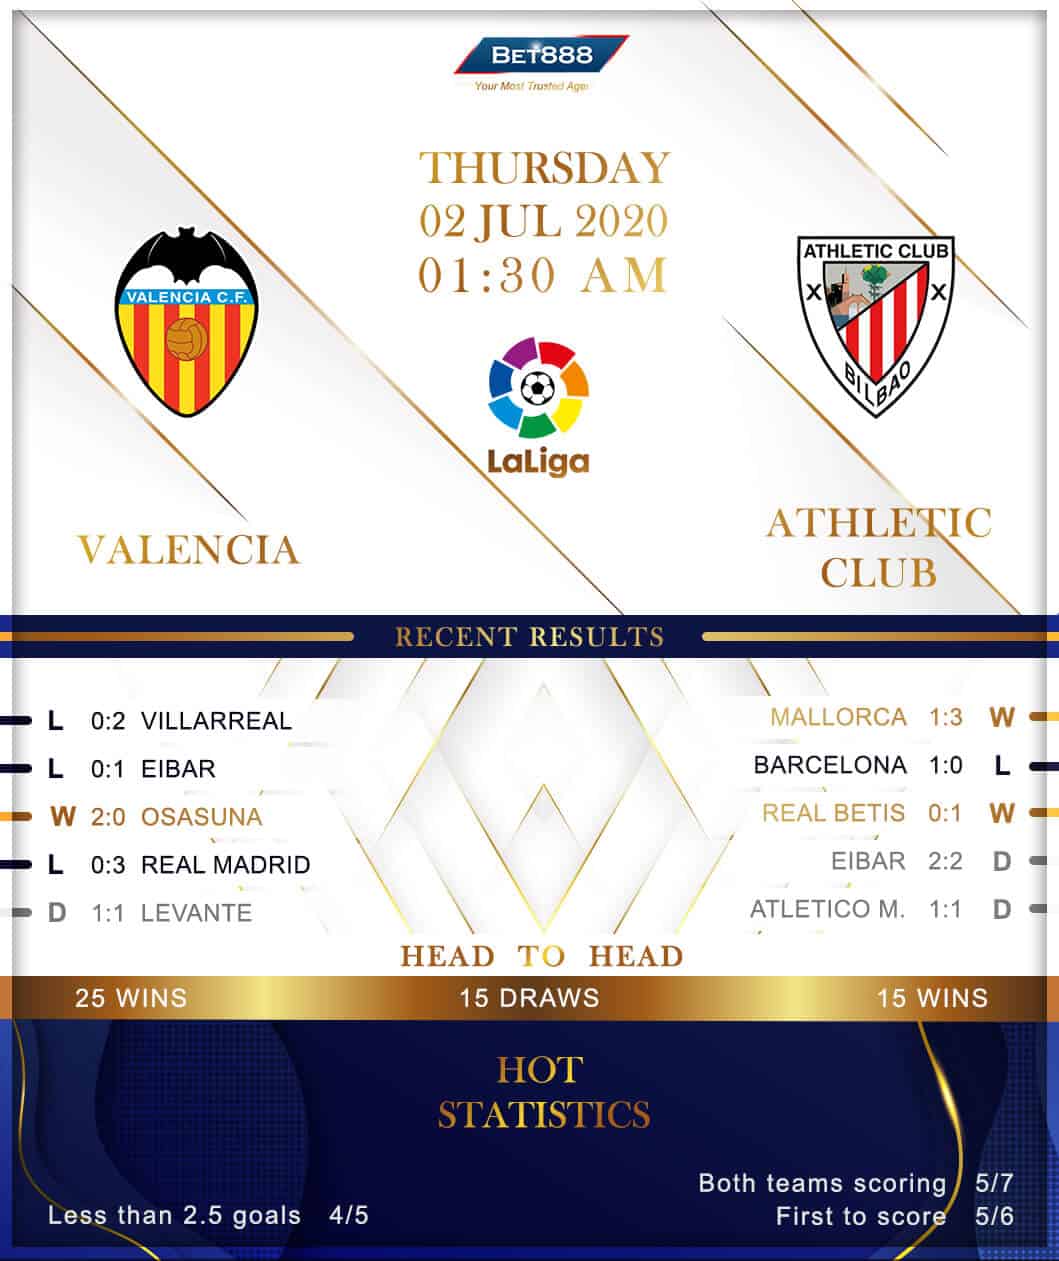 Valencia vs Athletic Club 02/07/20